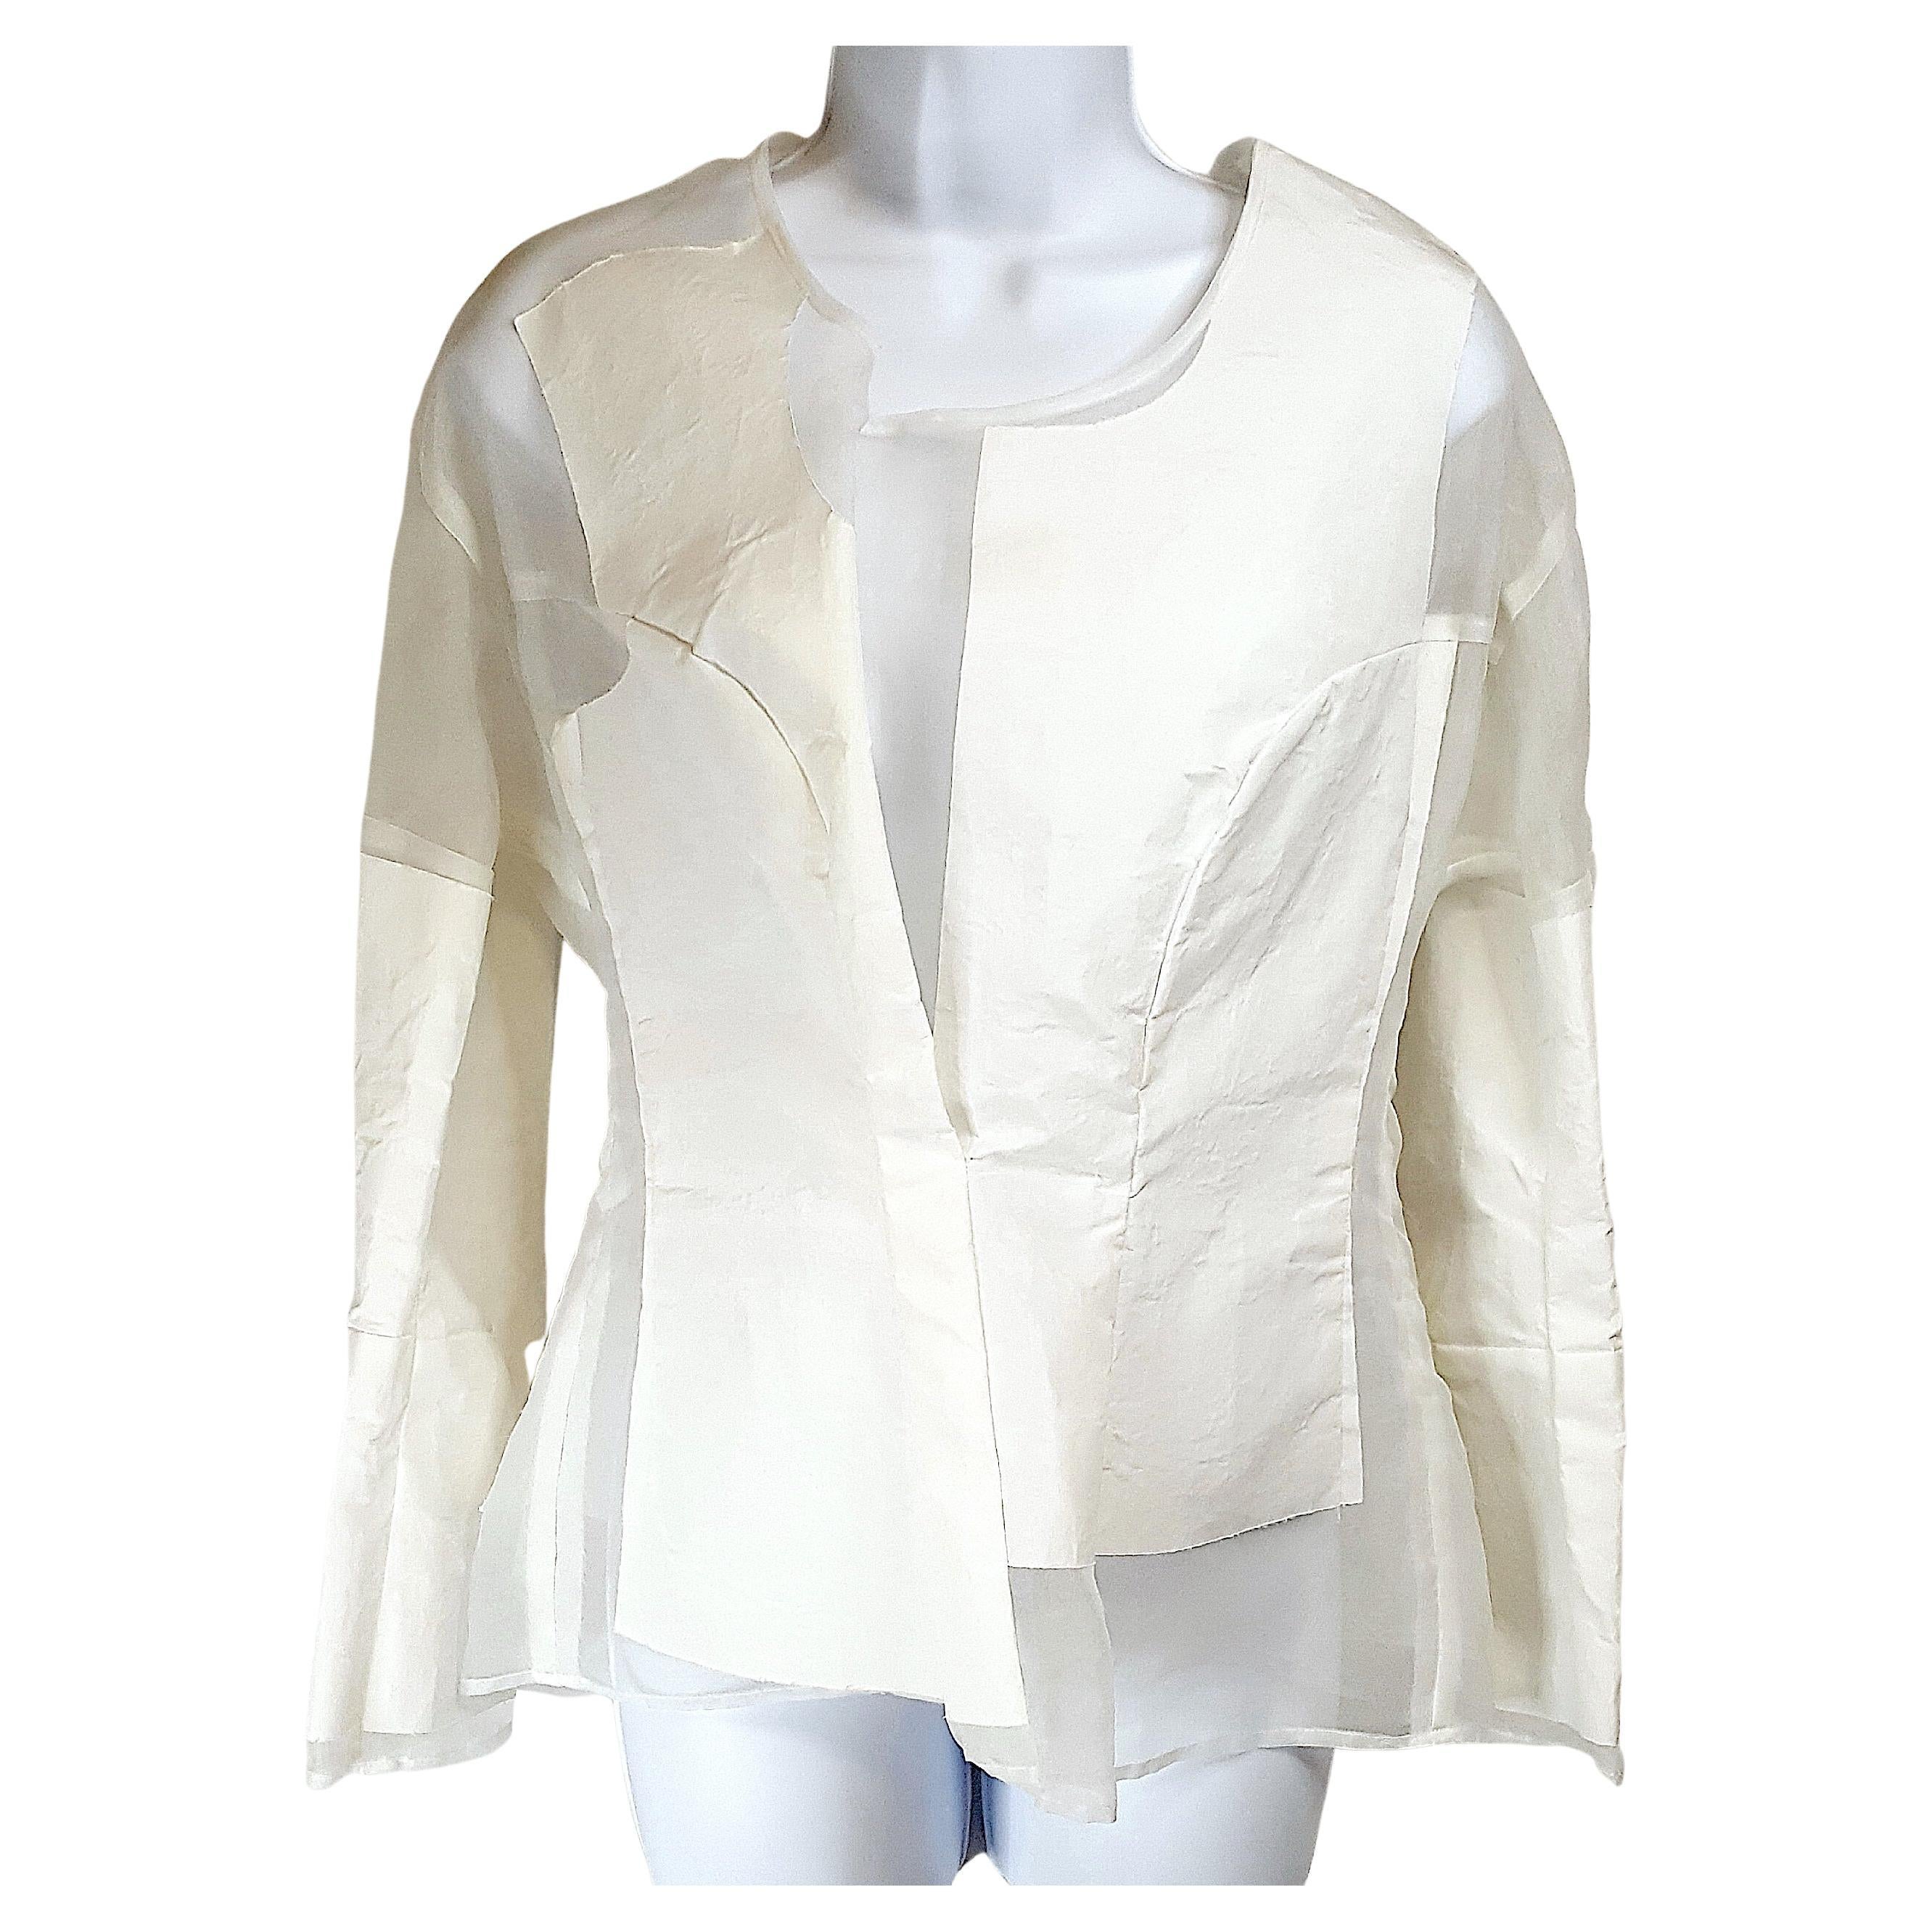 CommeDesGarcons 1997 AdultPunk Transparent EcruOrganza WhiteSilk Blouse Jacket  For Sale